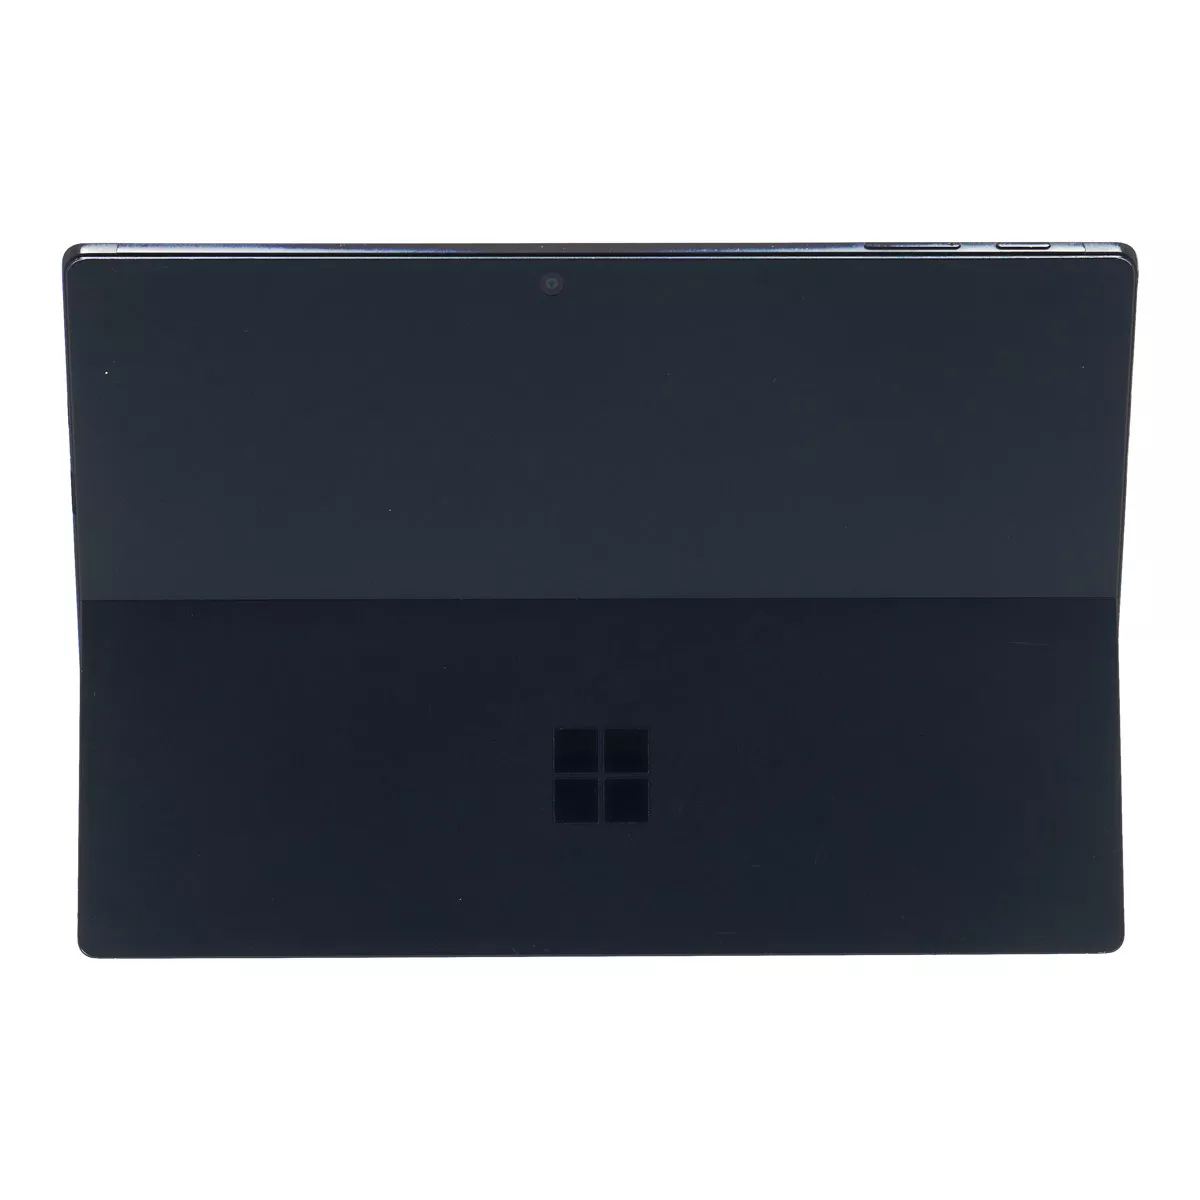 Microsoft Surface Pro 7 Core i5 1035G4 8 GB 240 GB SSD Webcam Black A+